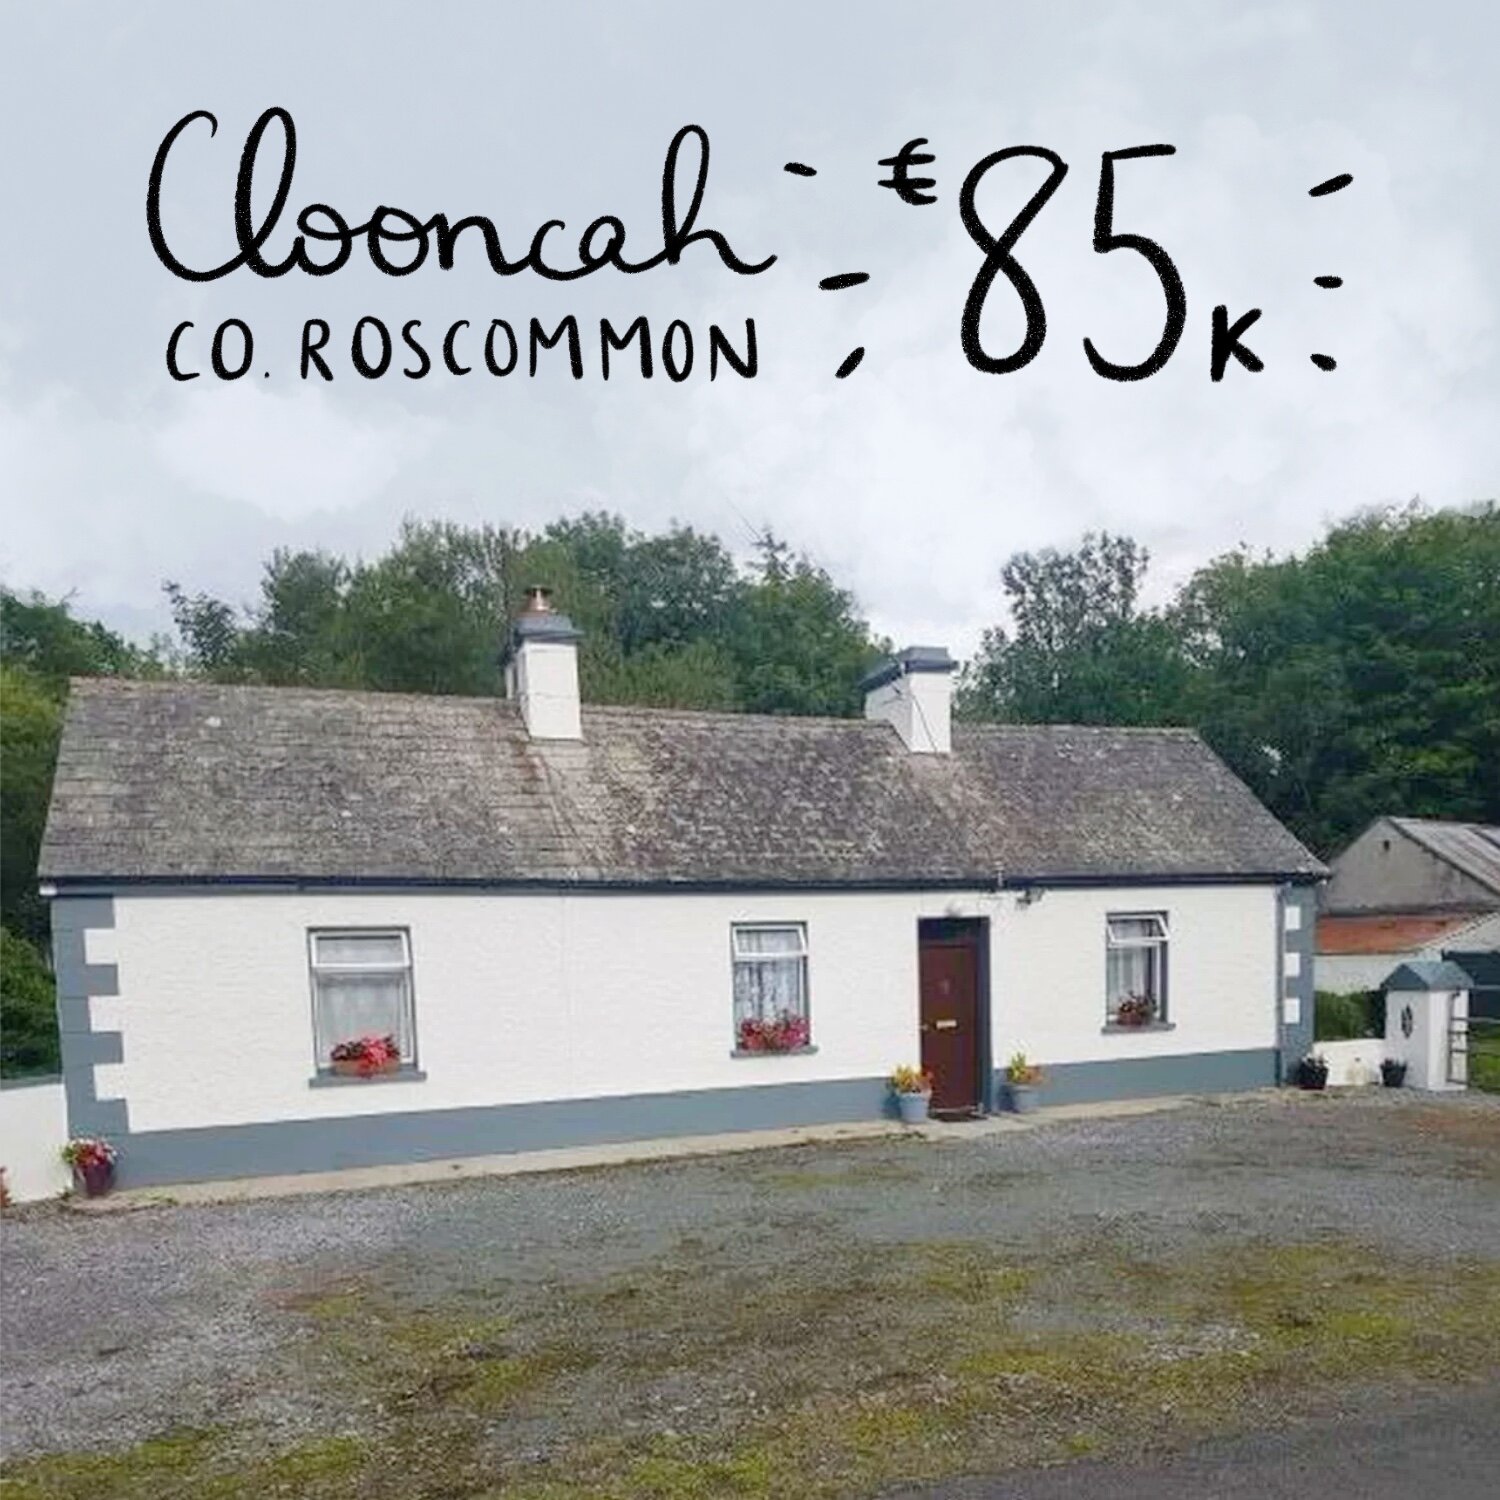 Clooncah, Strokestown, Co. Roscommon. €85k